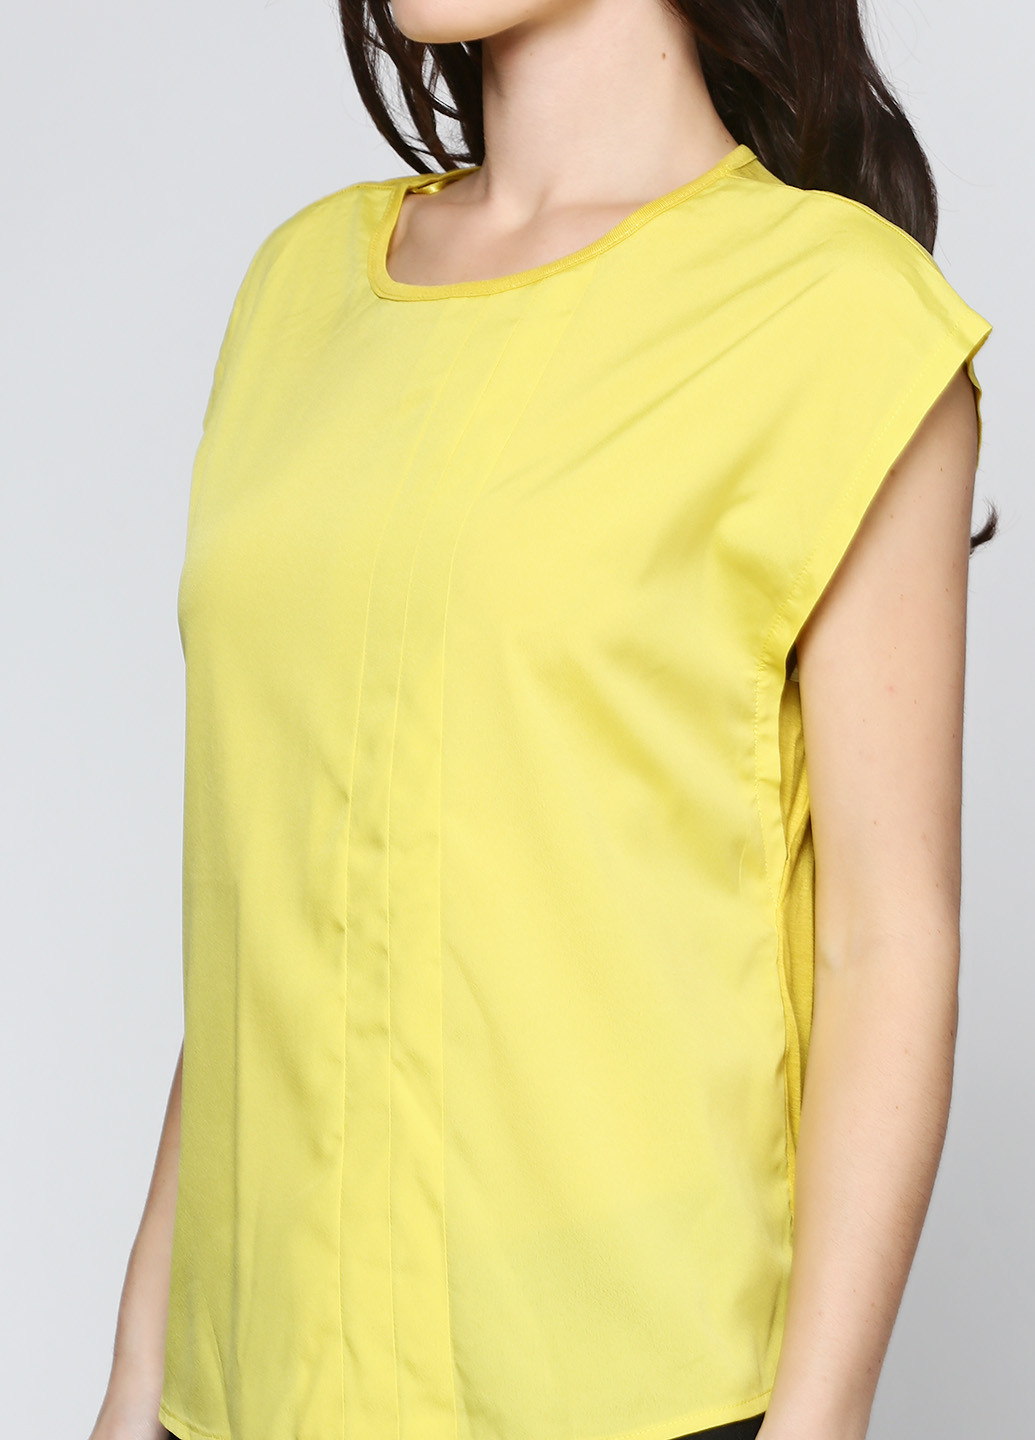 Жовта блузка Therapy